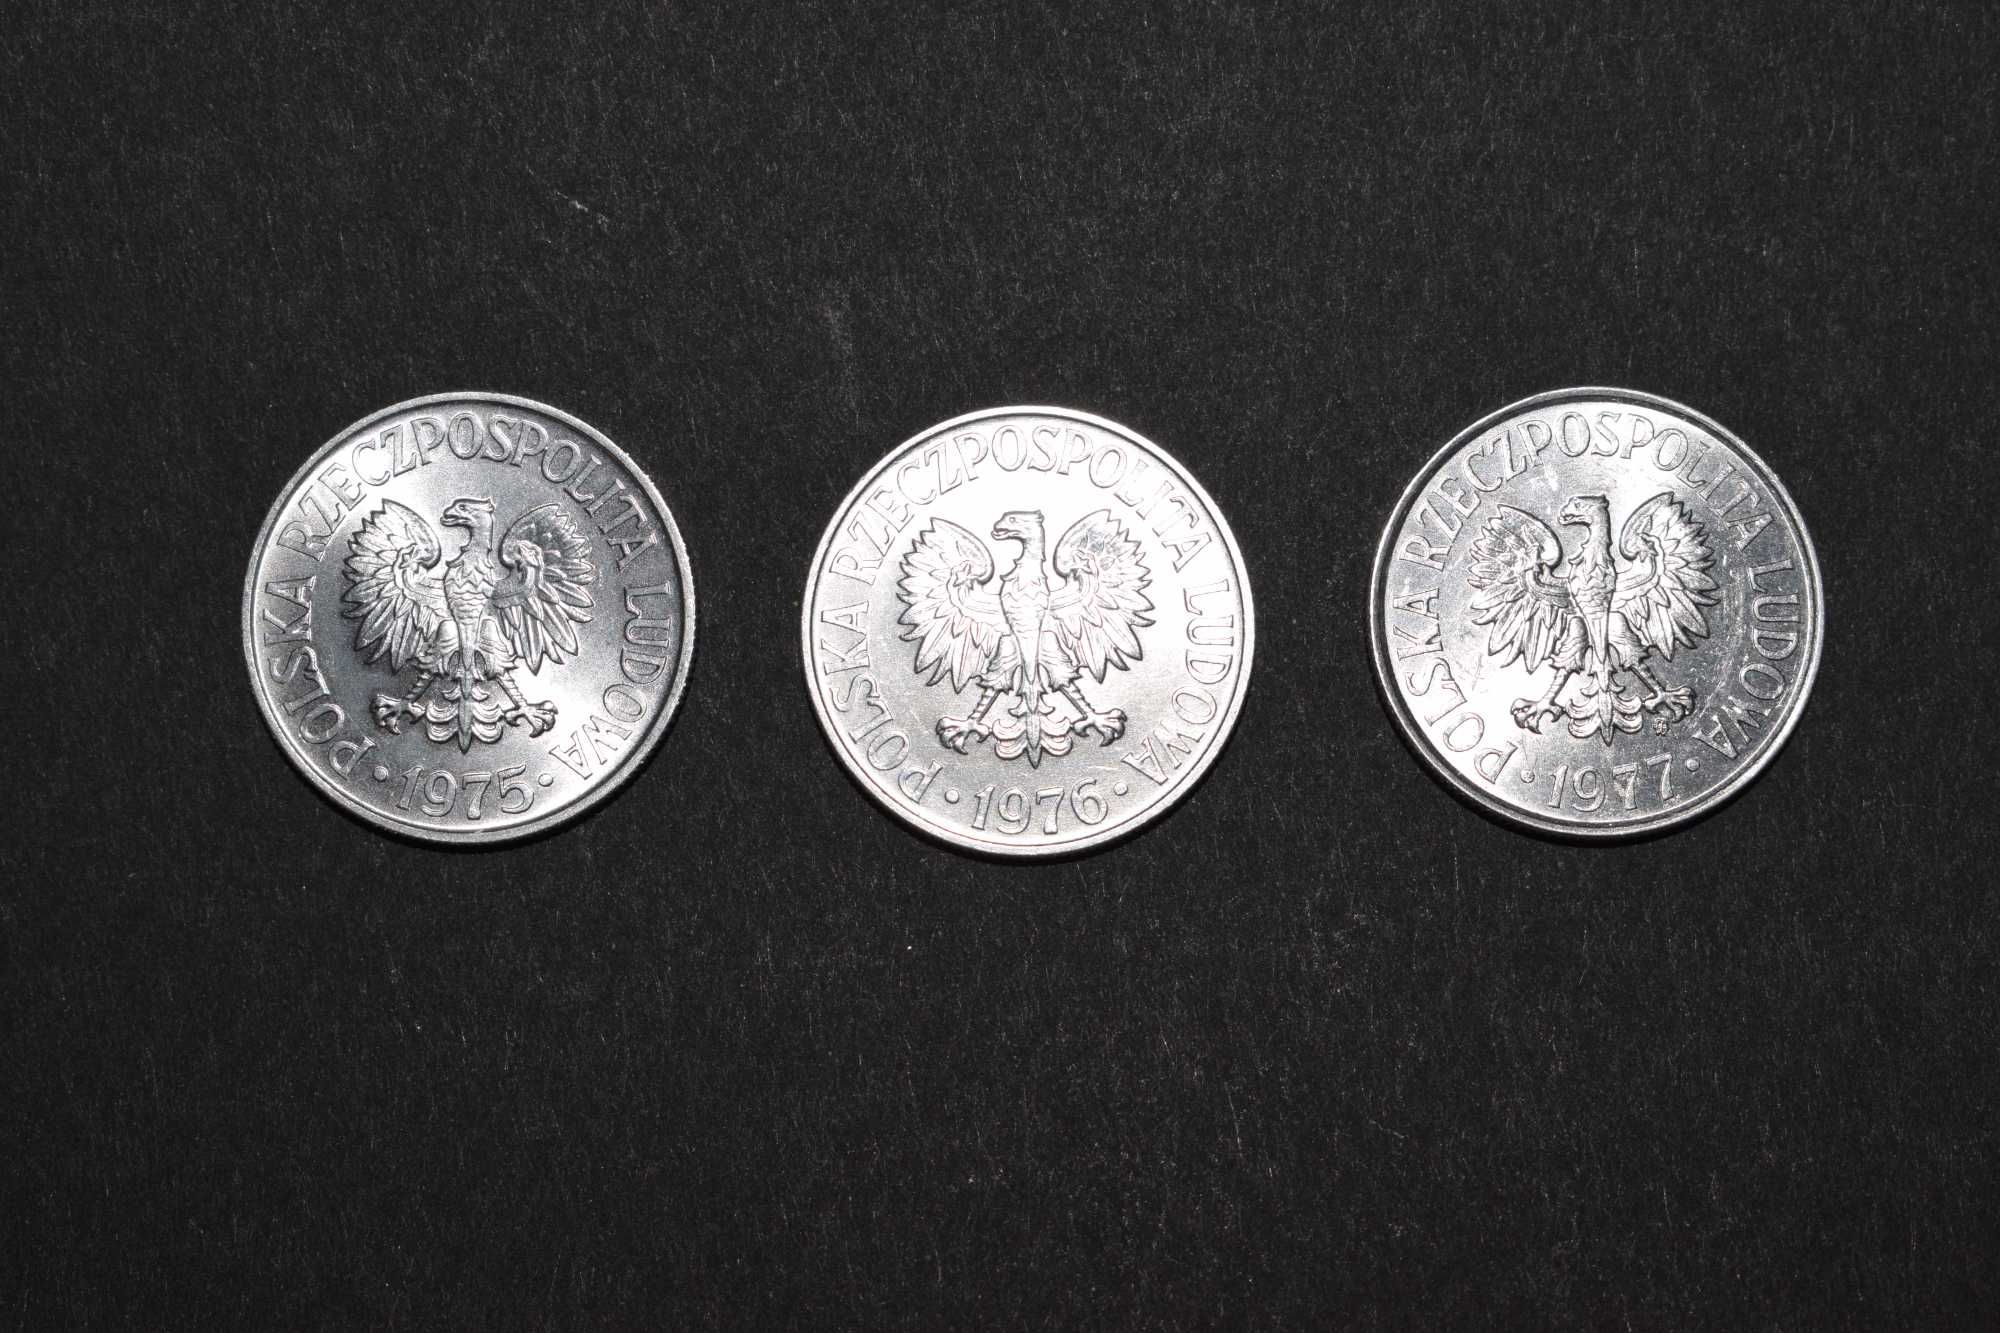 Zestaw monet 50 groszy 1975, 1976, 1977 rok.